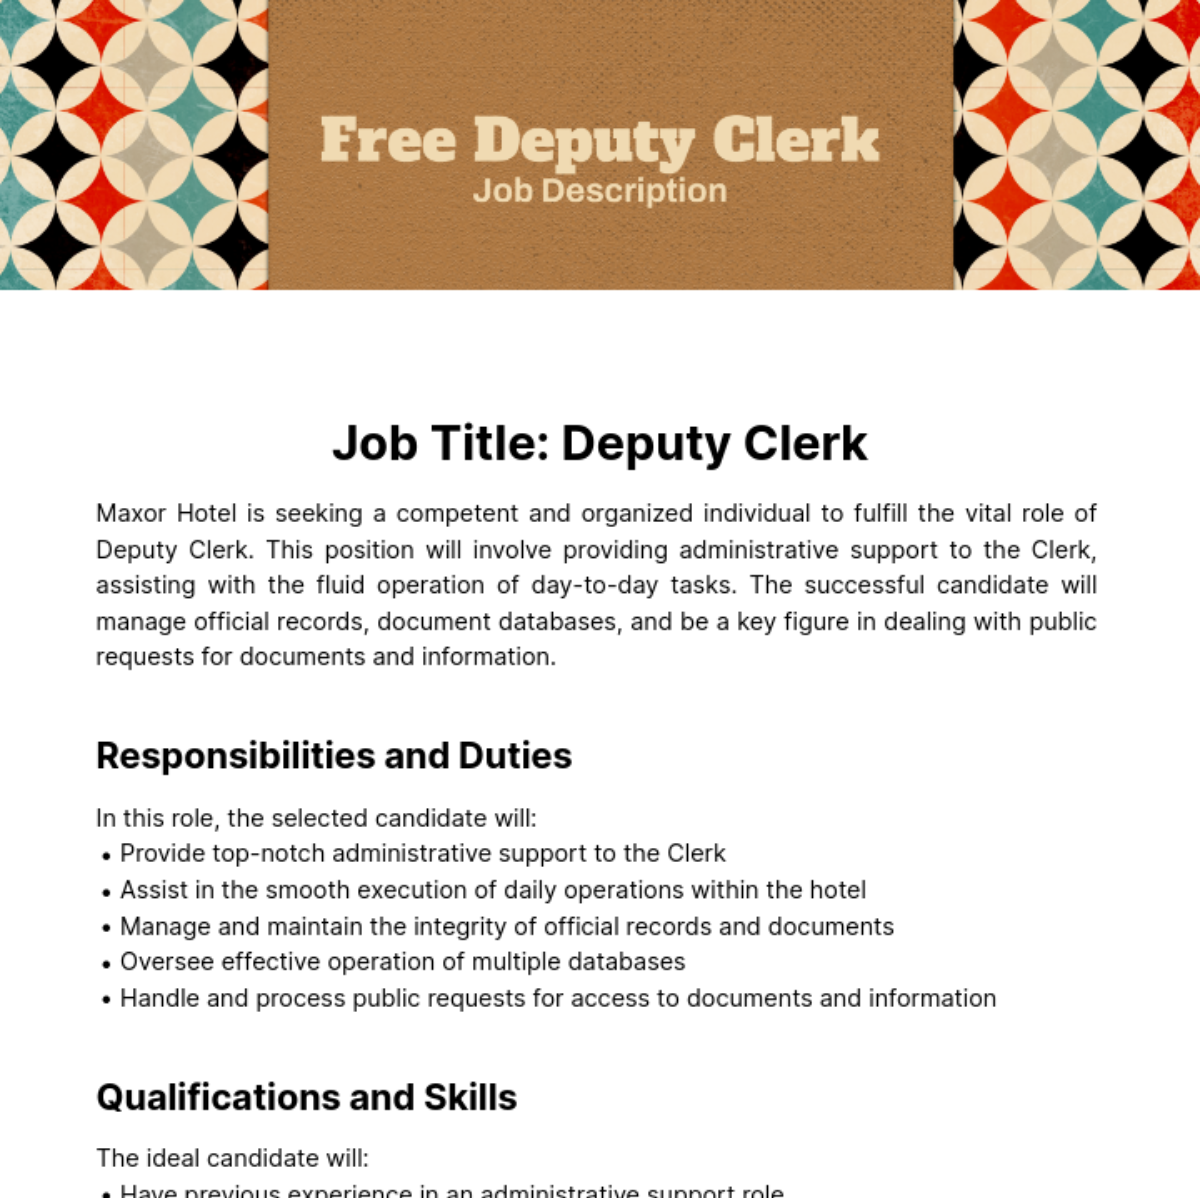 Free Deputy Clerk Job Description Template